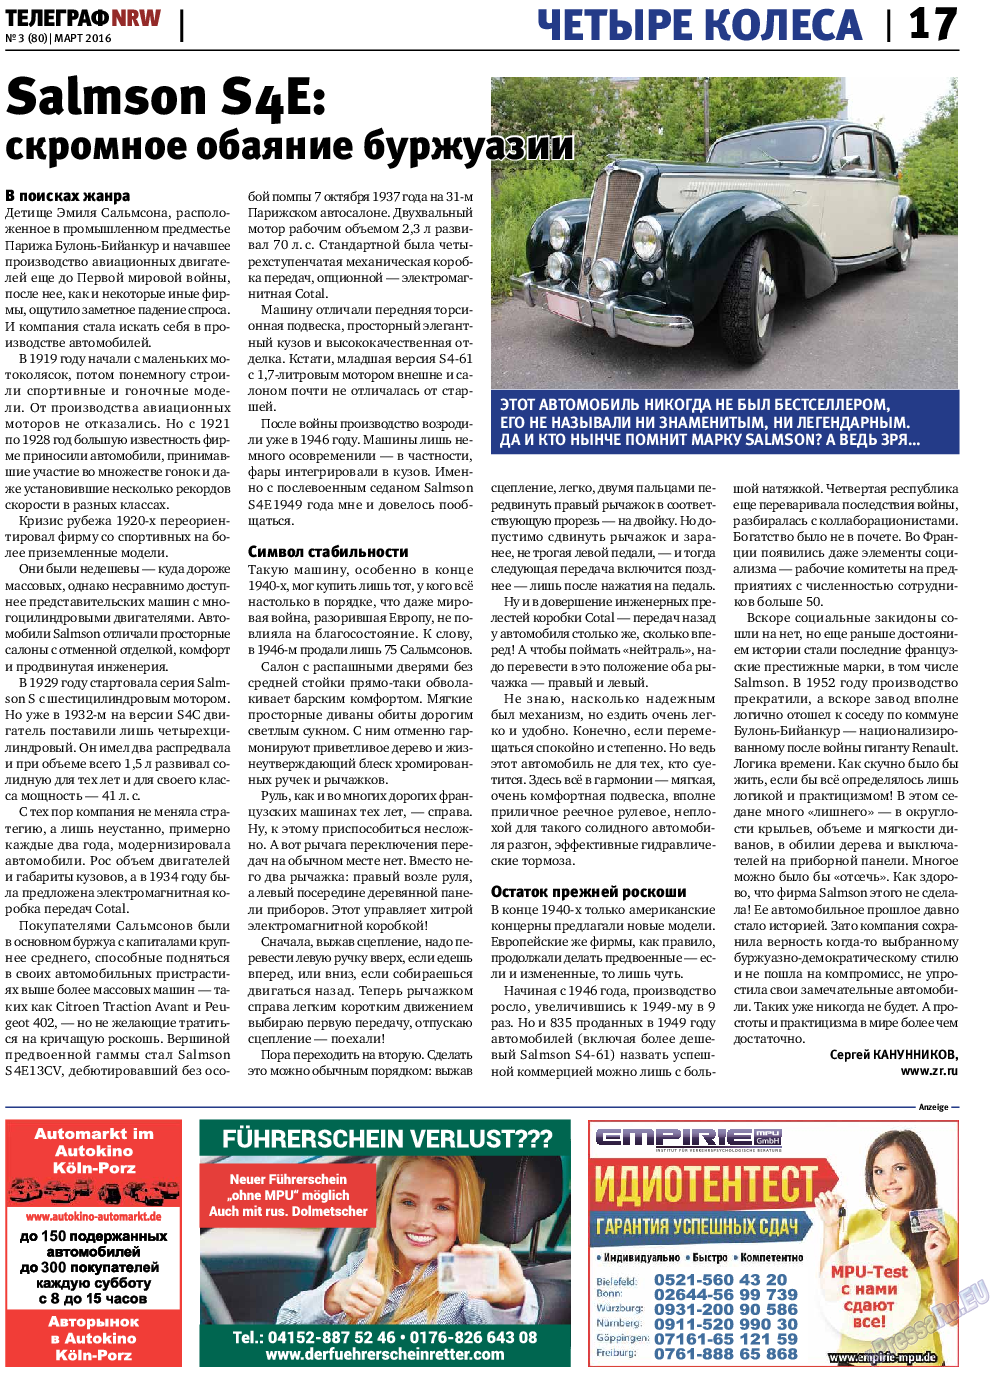 Телеграф NRW, газета. 2016 №3 стр.17